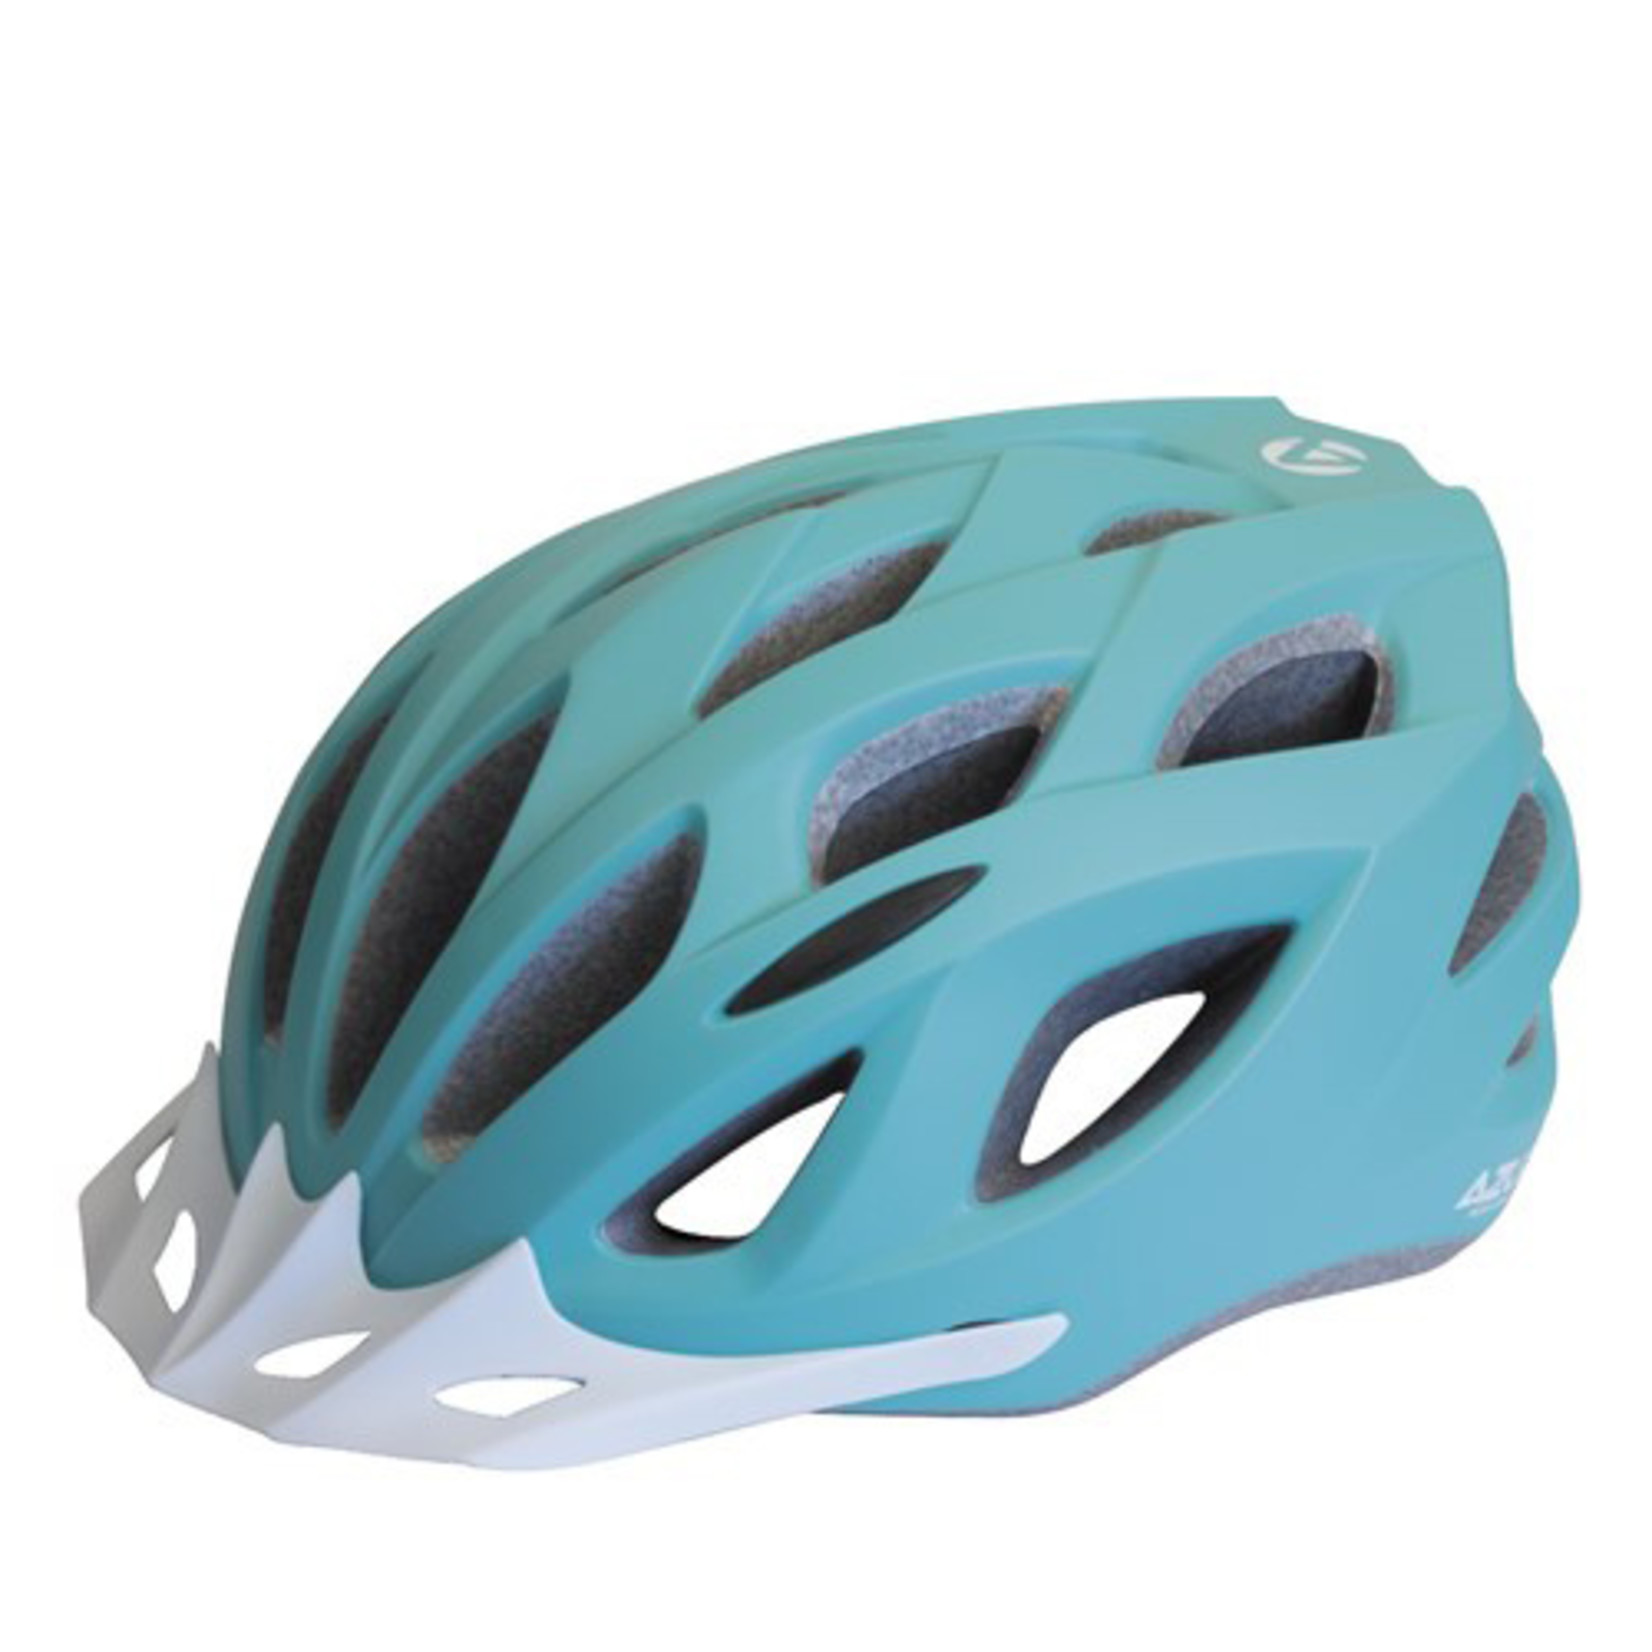 Azur Azur Bike Helmet - L61 Series - Matt Teal Lightweight in-Mould shell